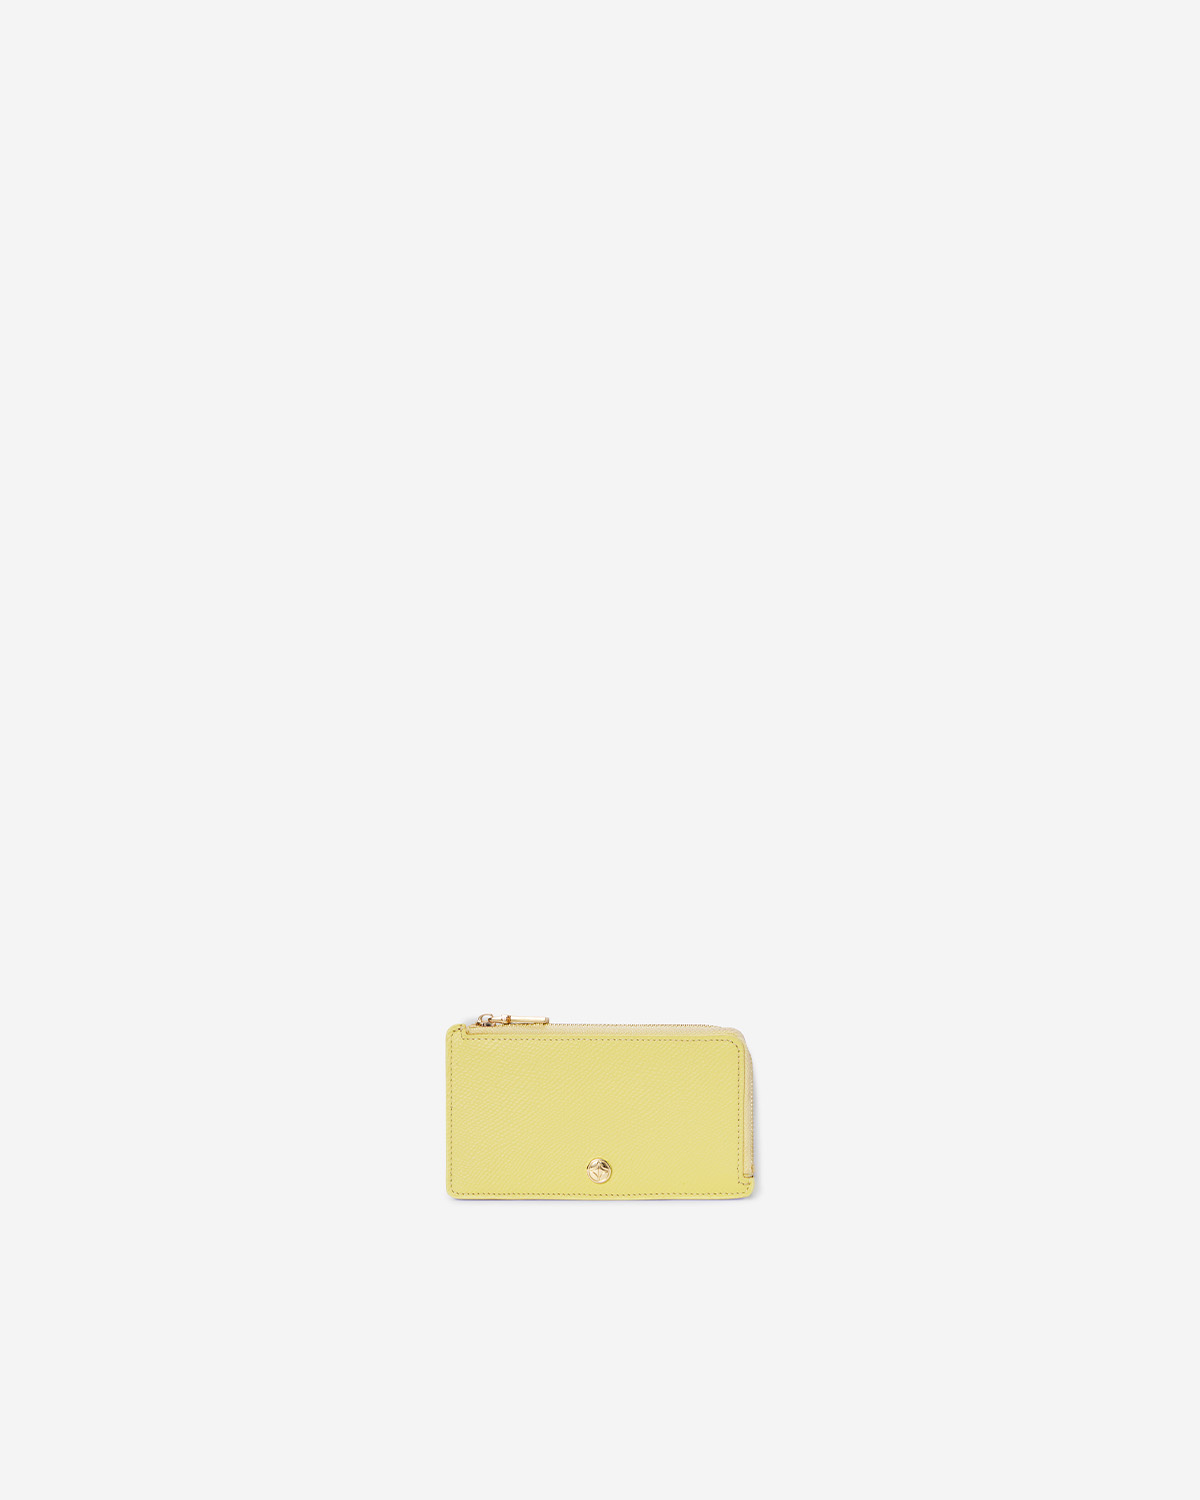 VERA Emily Long Card holder in Happy Yellow กระเป๋าใส่บัตรหนังแท้ ทรงยาว พร้อมช่องซิบ สีเหลื